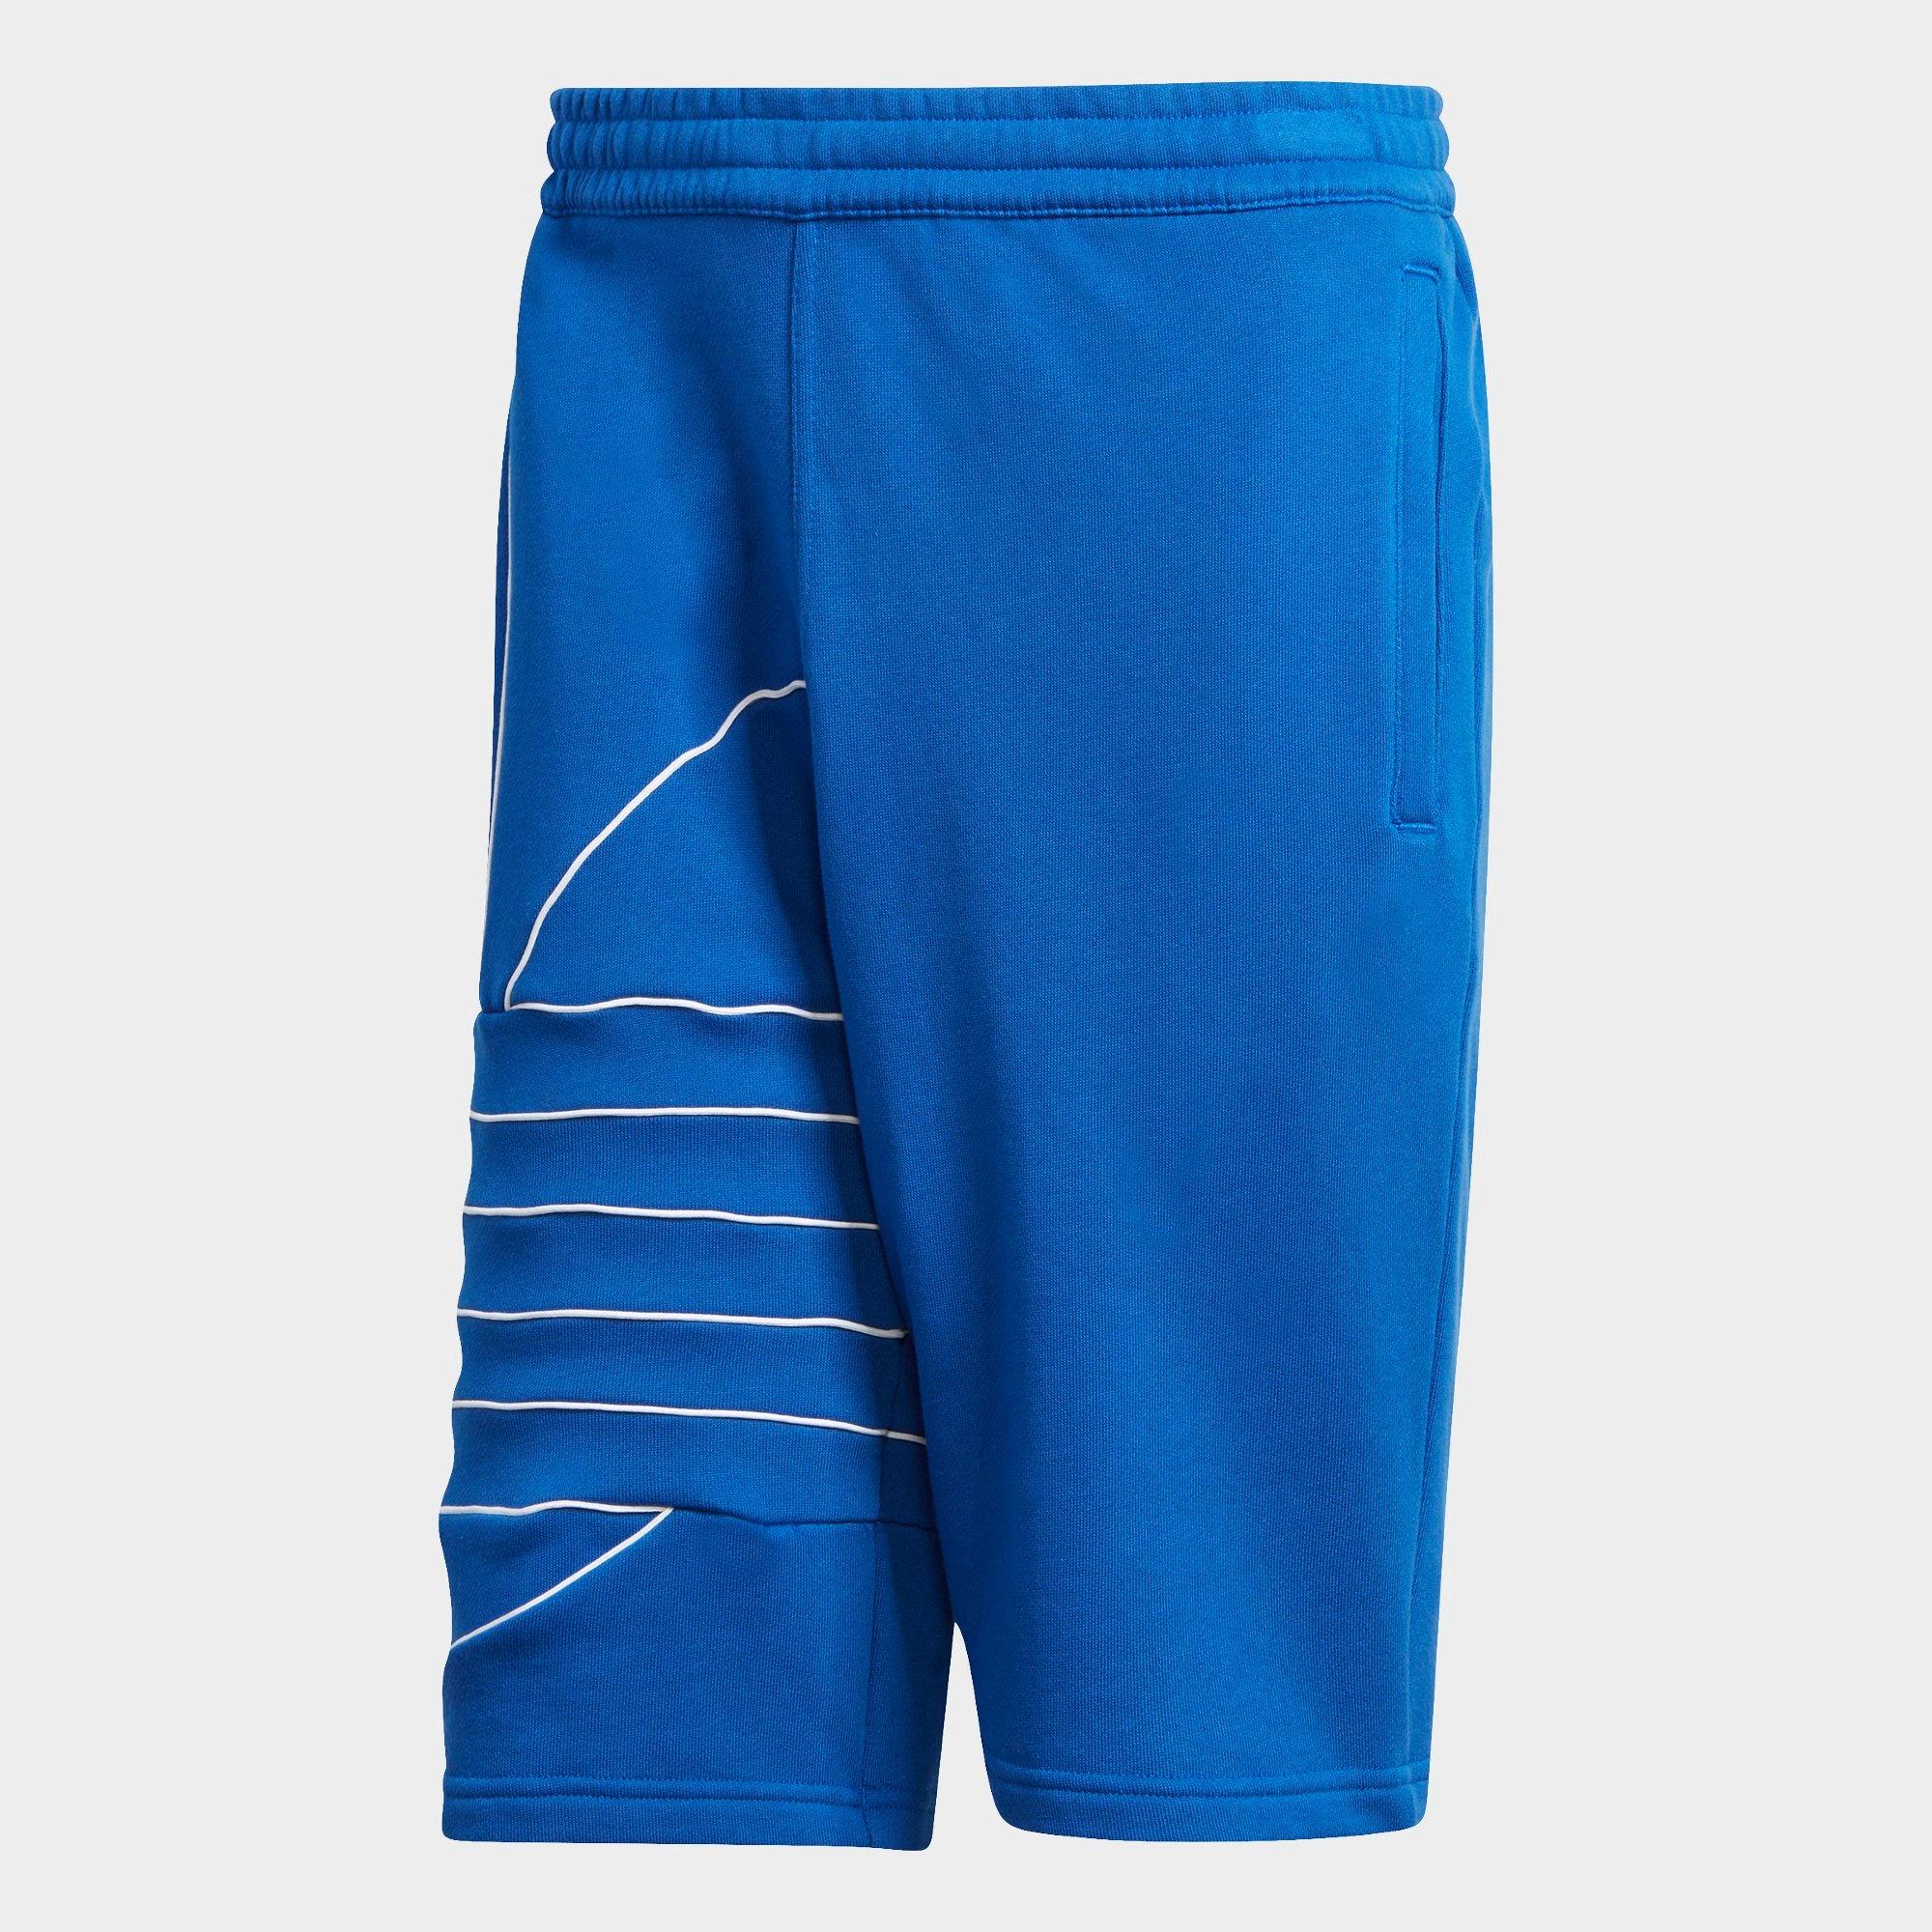 adidas outline shorts blue